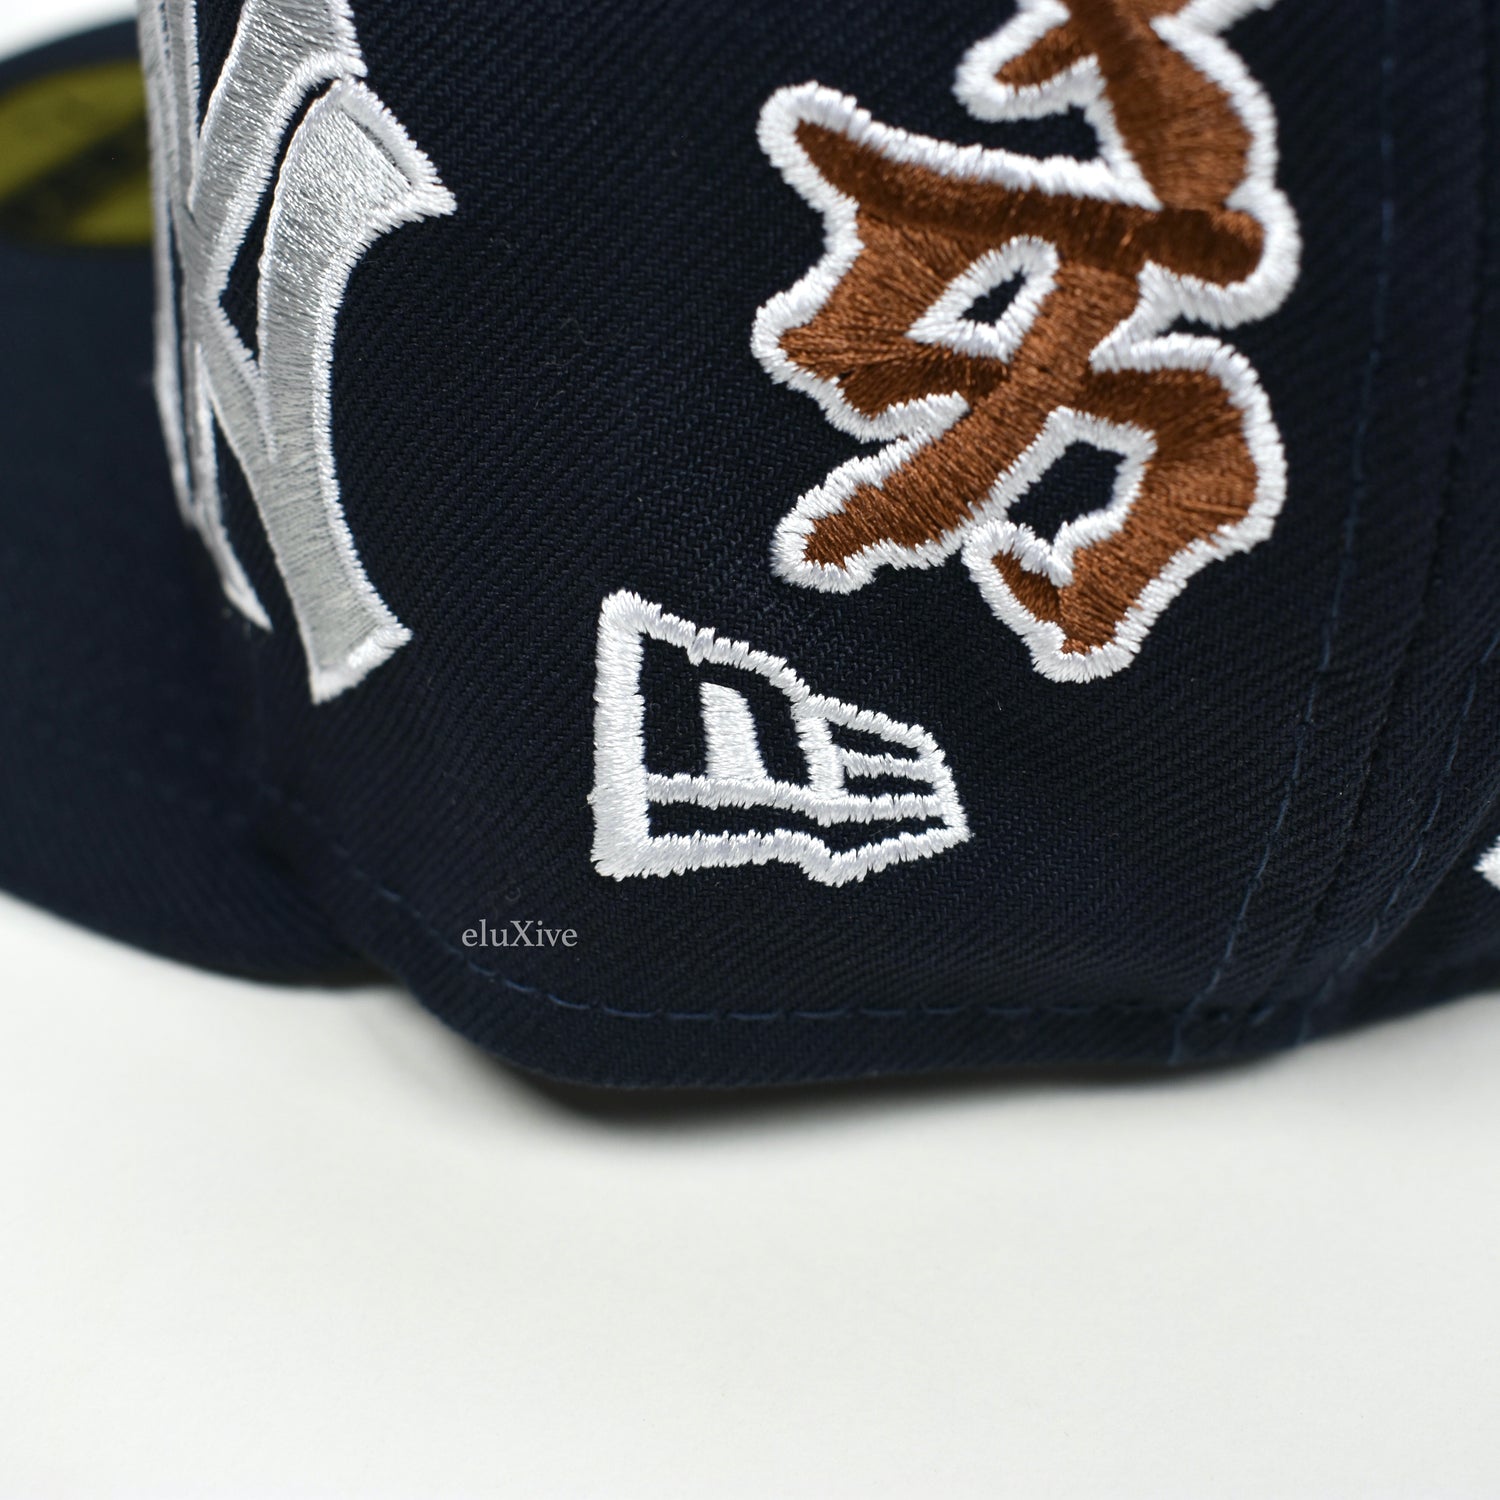 Supreme New York Yankees Kanji New Era Fitted Hat Black - FW22 - US